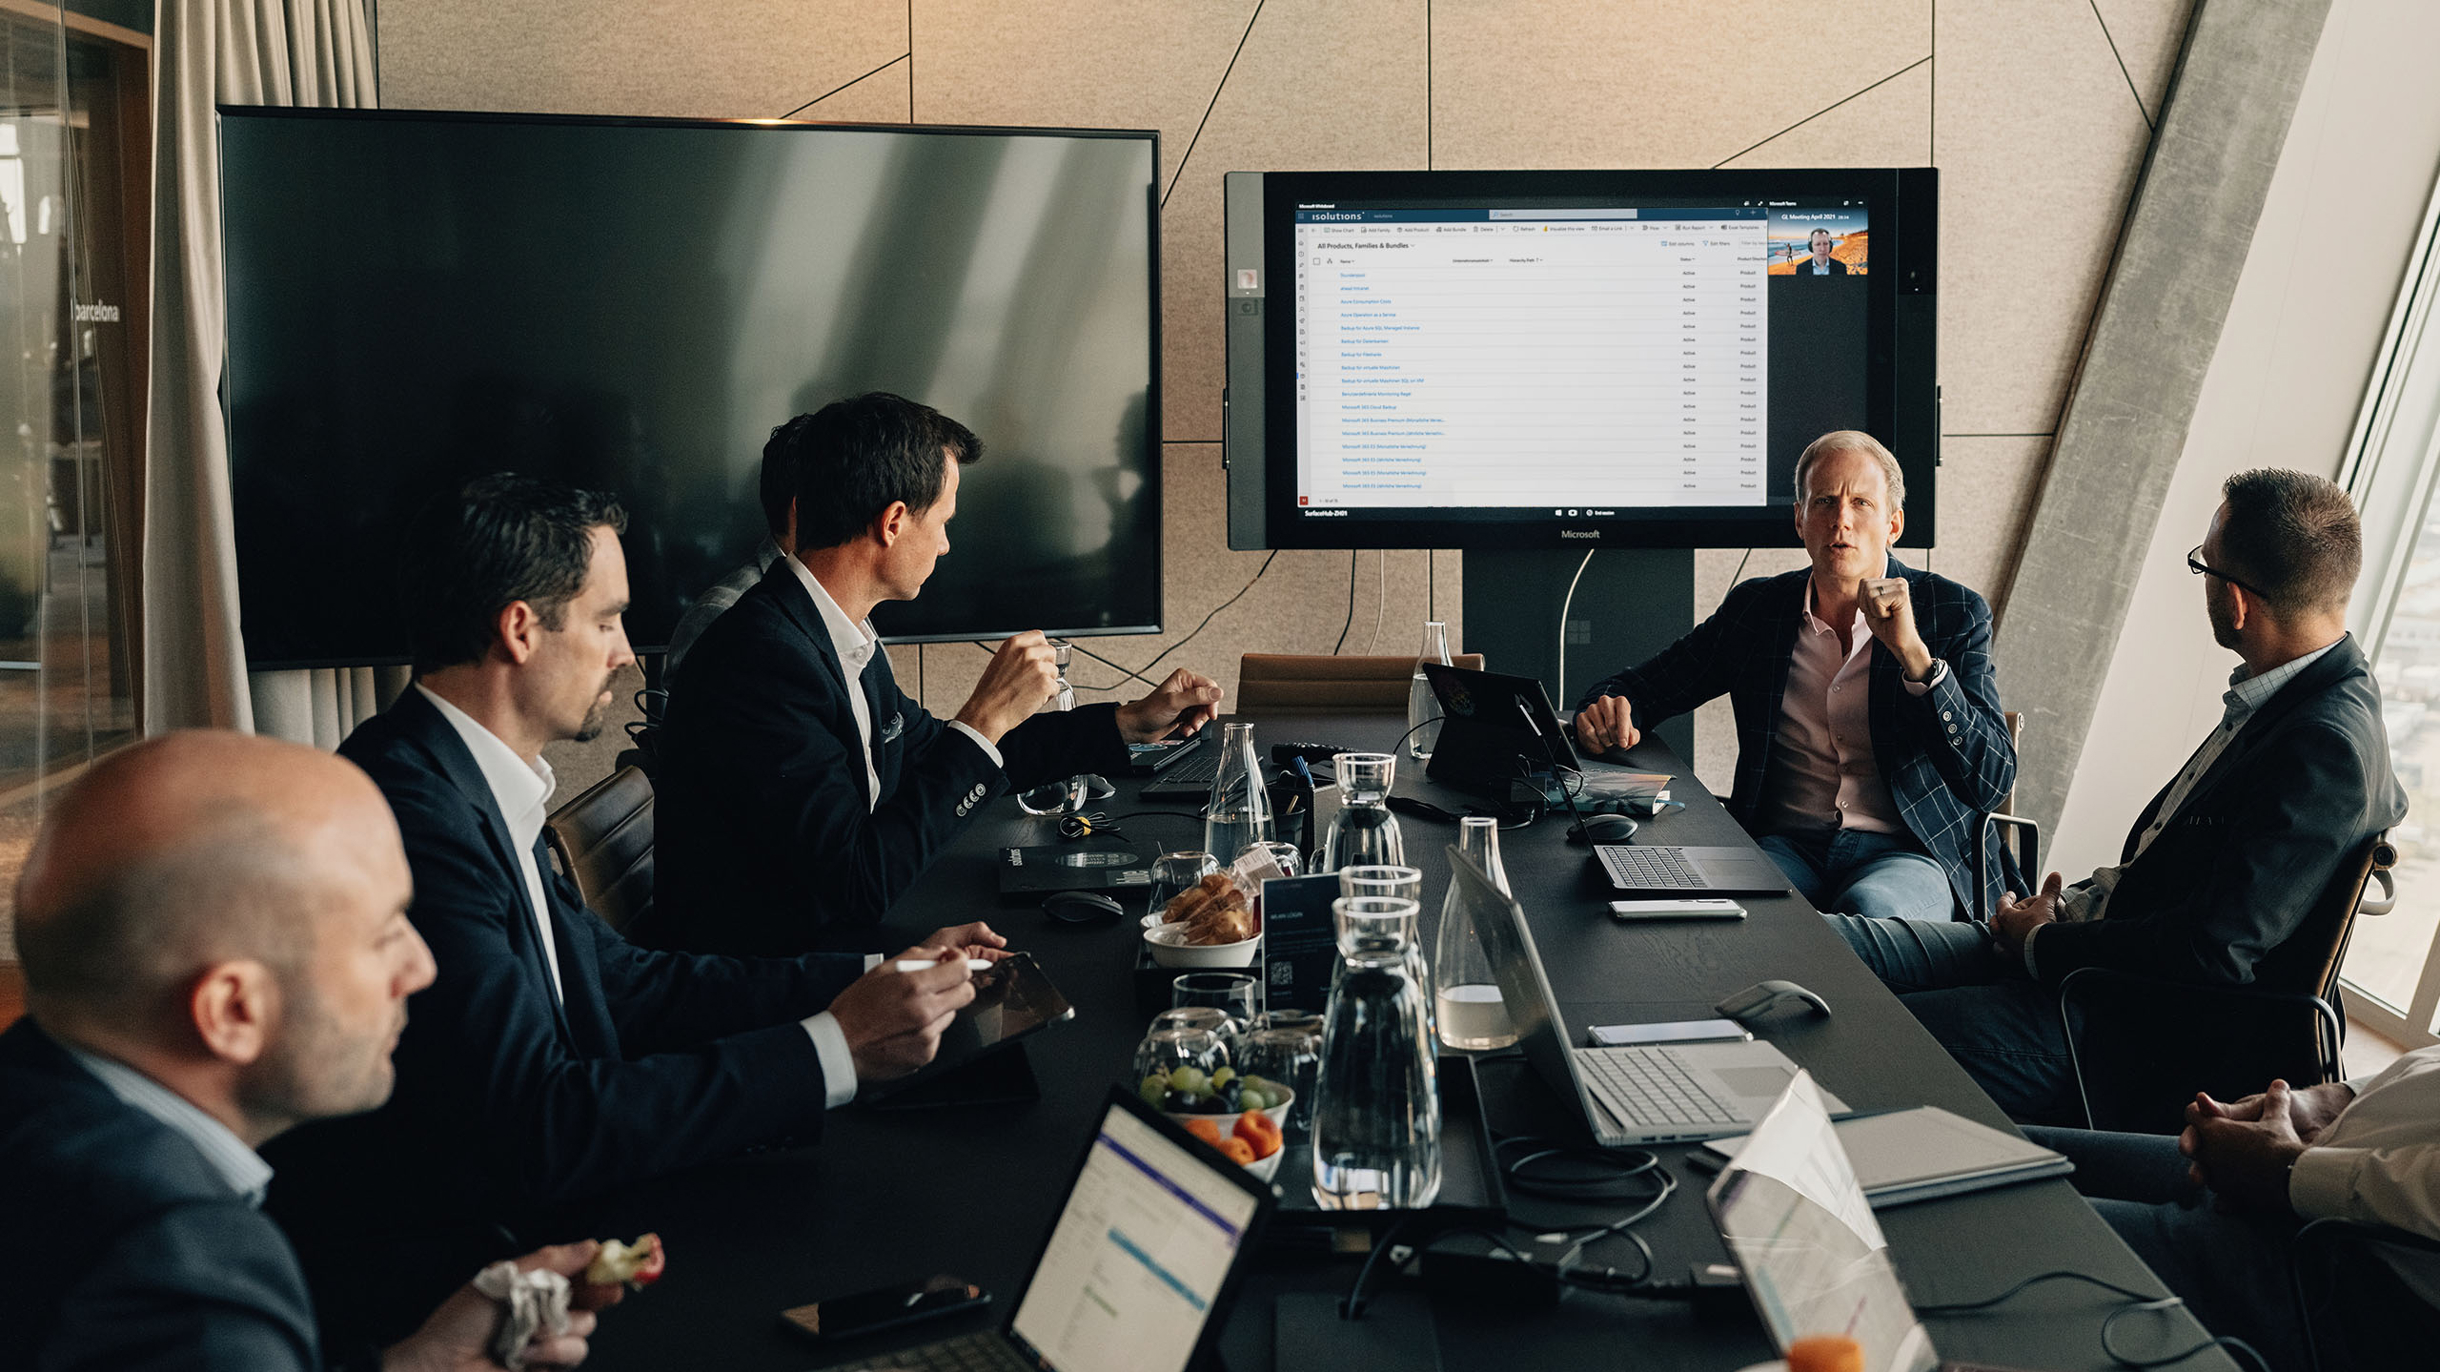 Digital Sales Besprechung mit 7 Männern in modernem Meetingroom